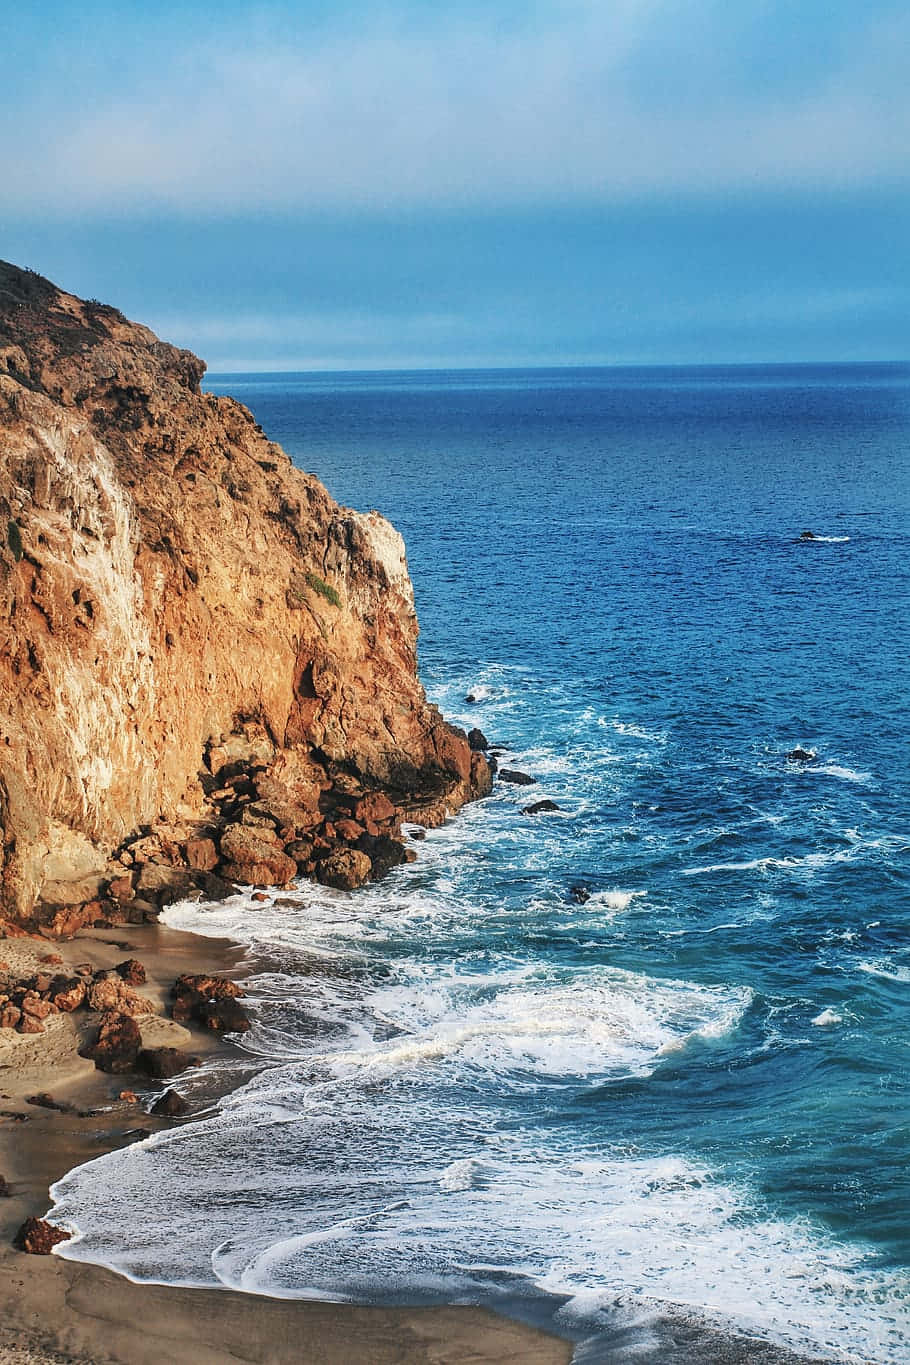 Iphone X Malibu Background Calm Seashore